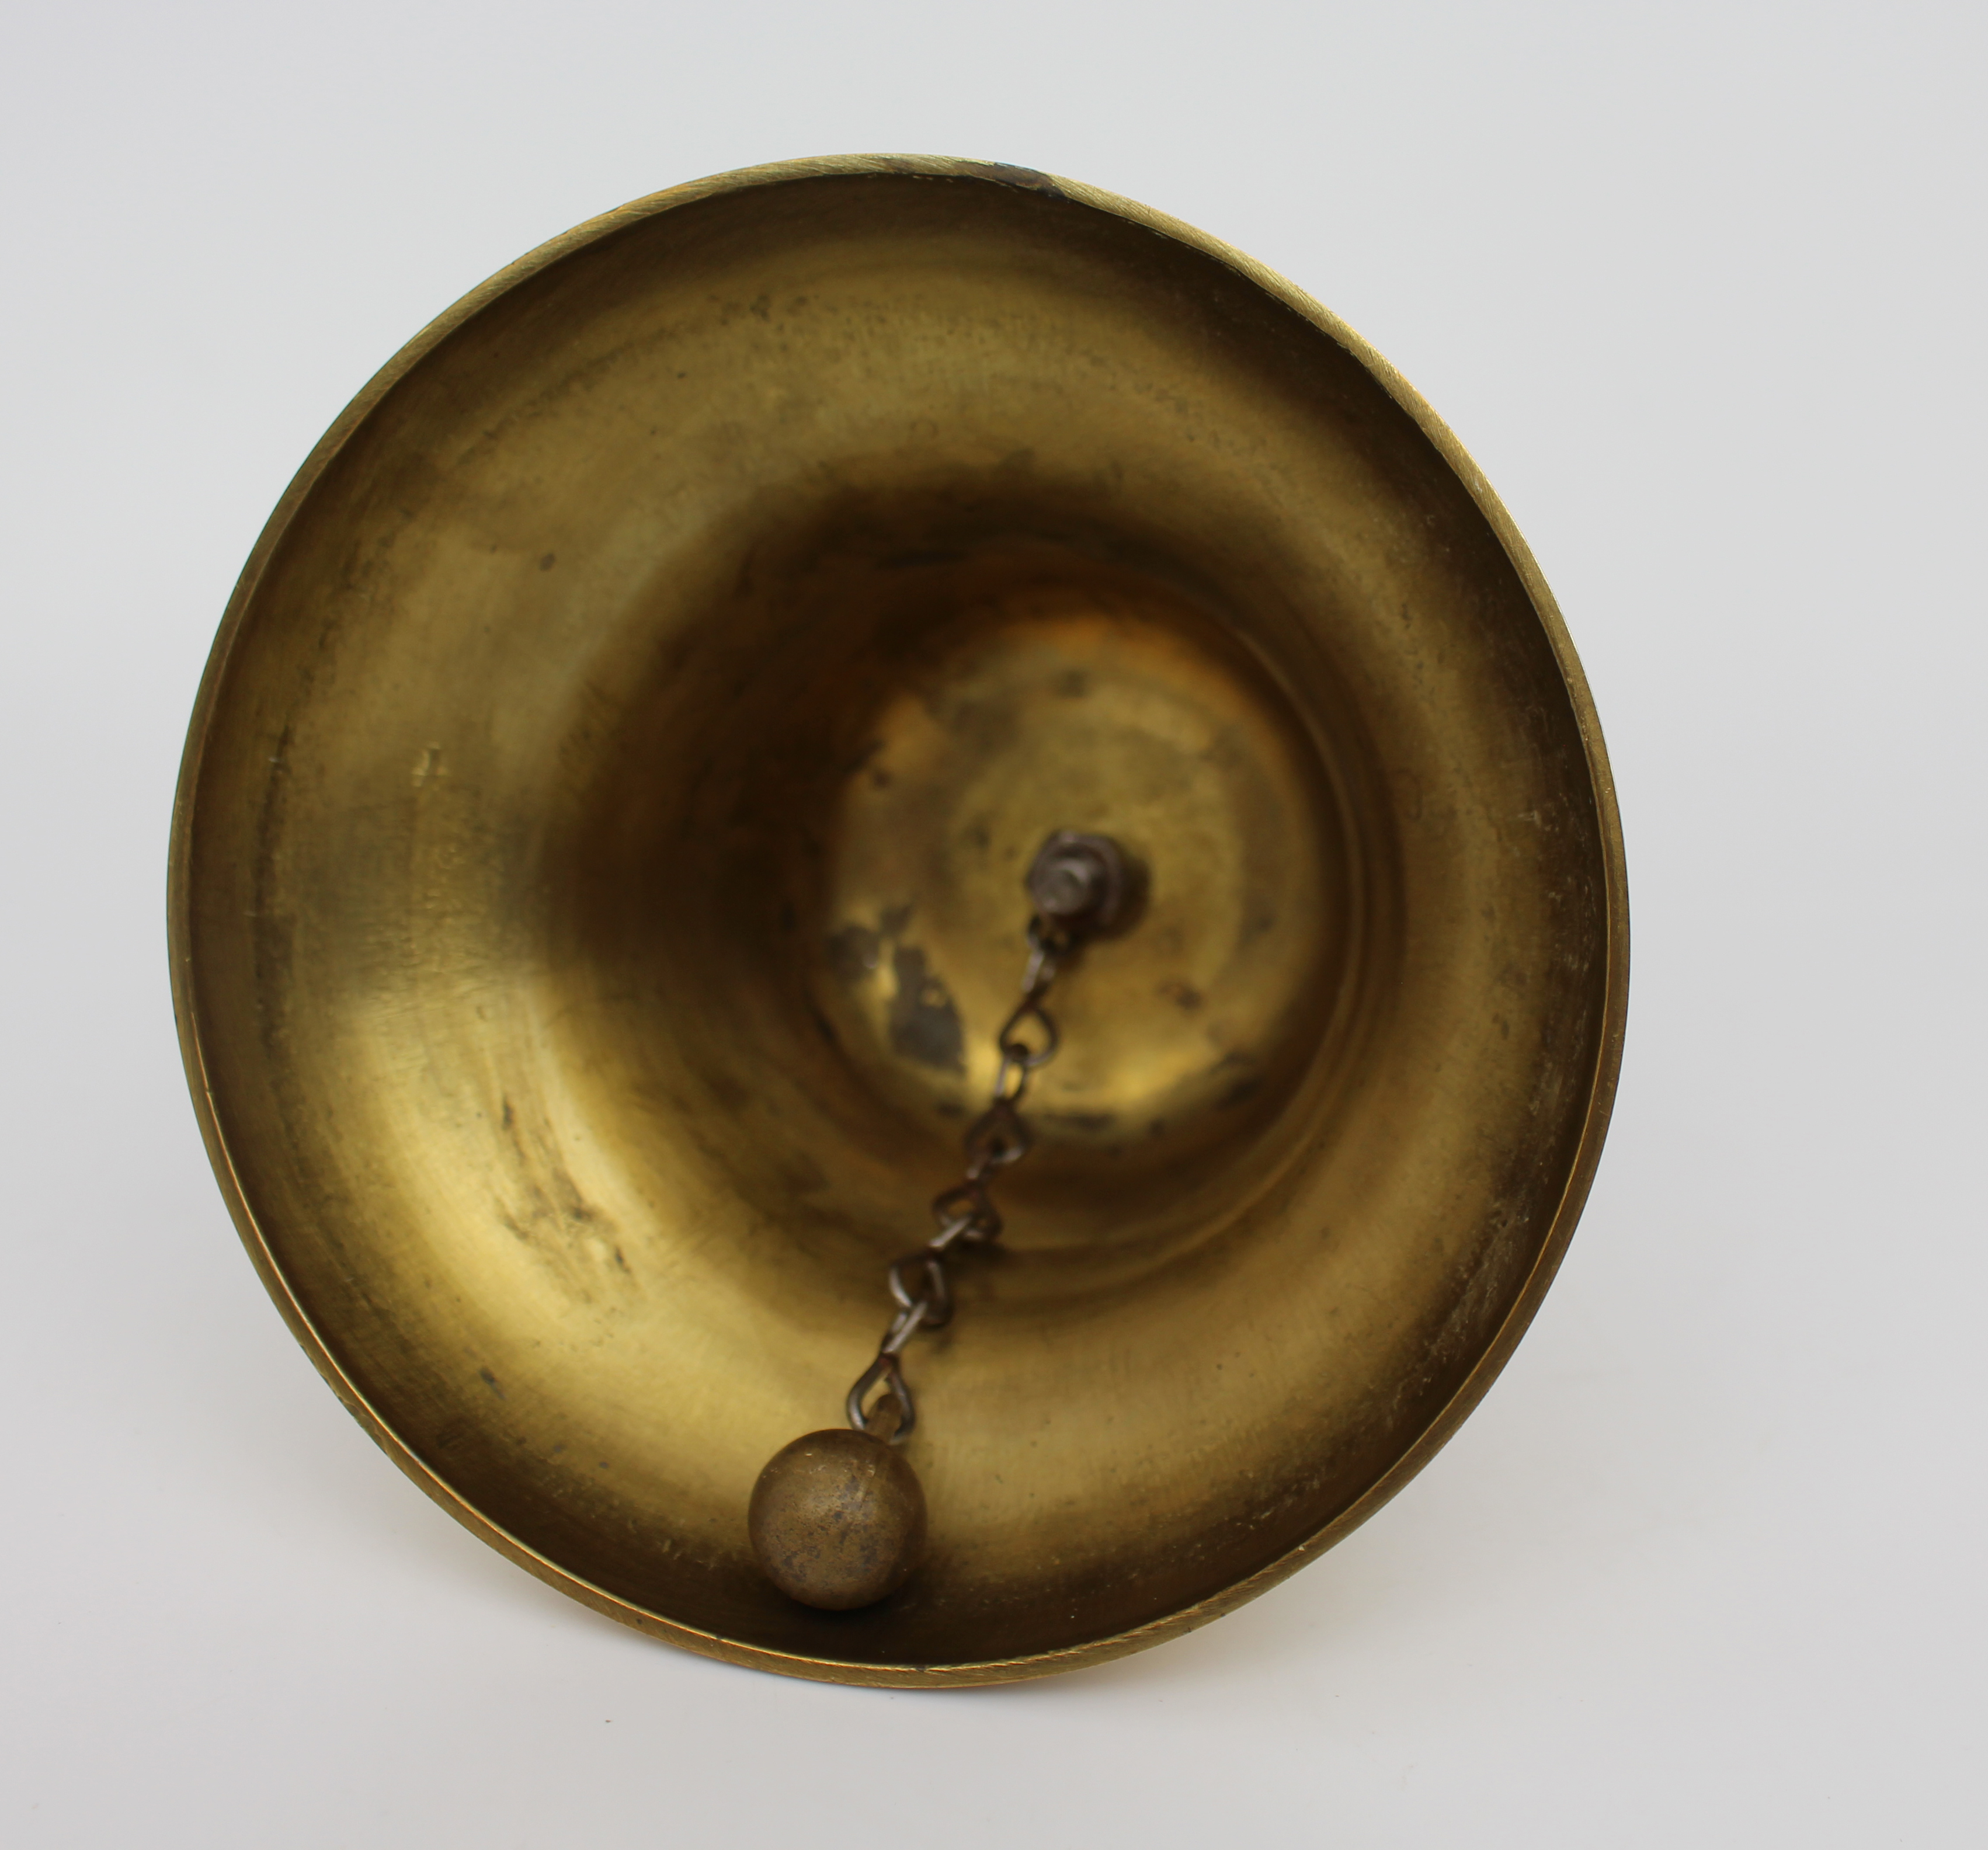 Vintage Brass Bell - Image 2 of 2